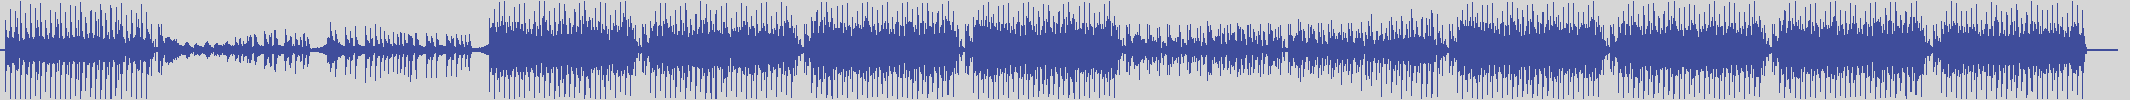 nf_boyz_records [NFY045] Rewind Project - Zonda [Sunset Deep Mix] audio wave form